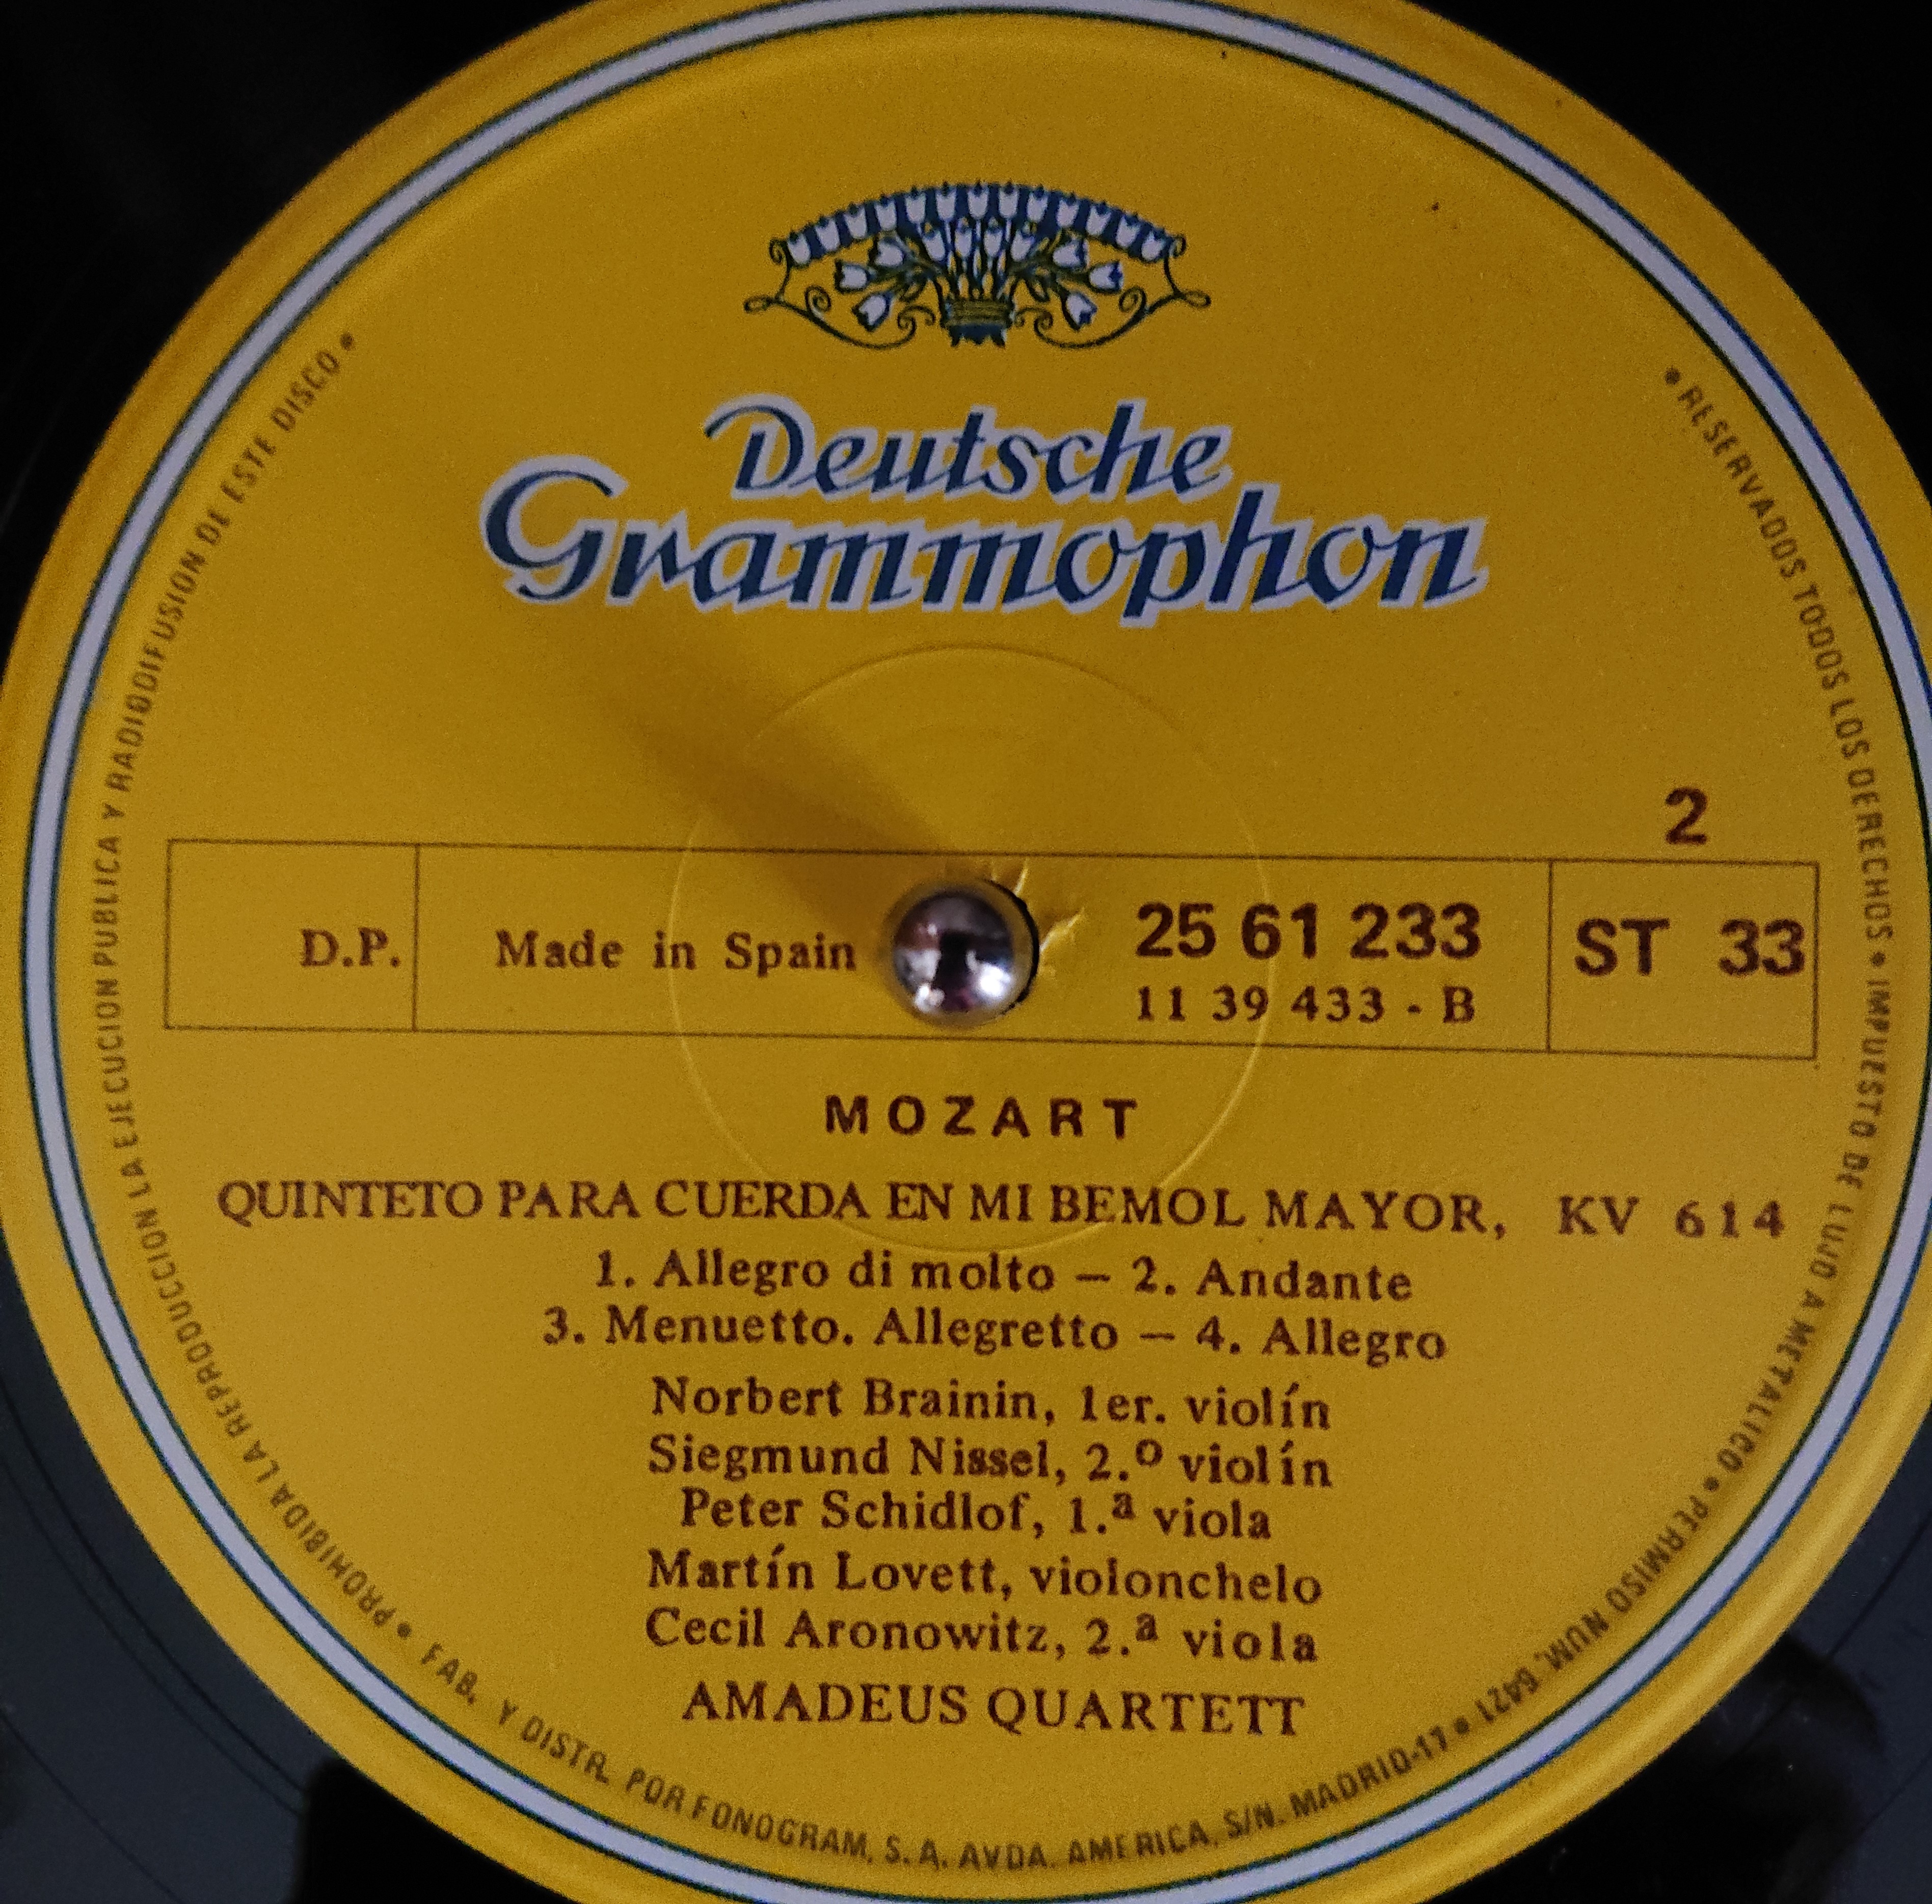 Etiqueta del disc